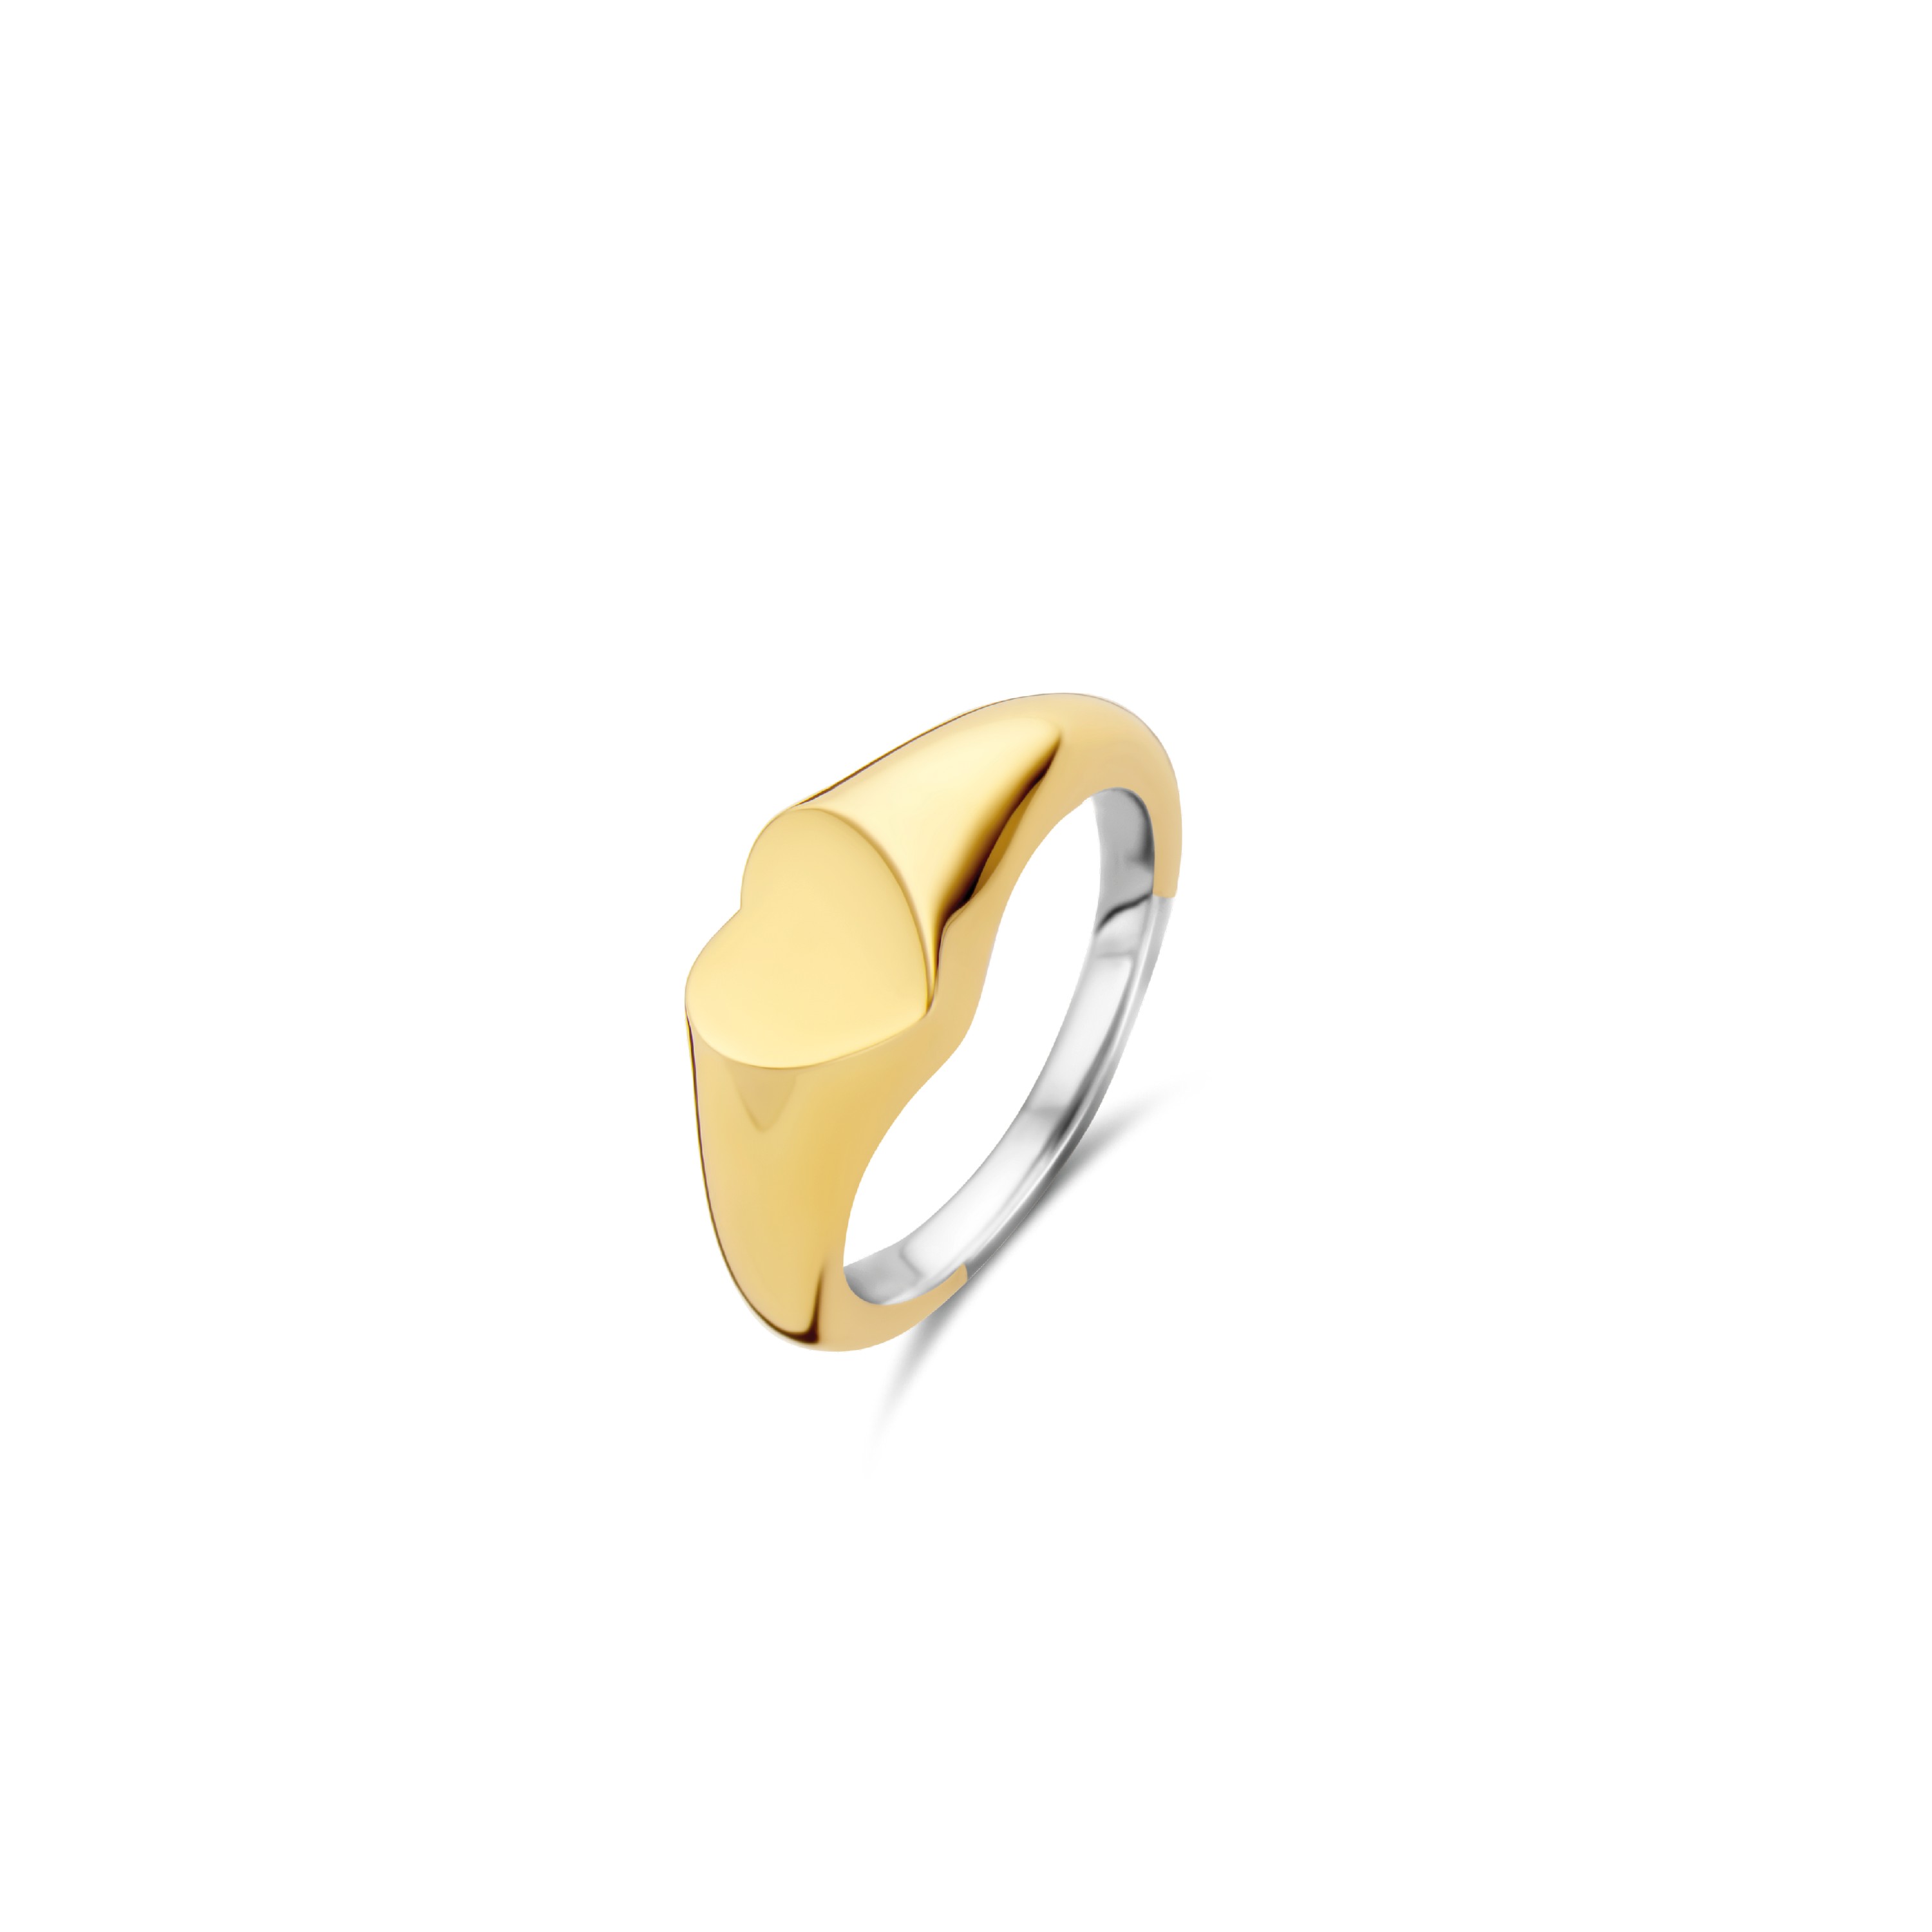 TI SENTO - Milano Ring 12221SY Gala Jewelers Inc. White Oak, PA